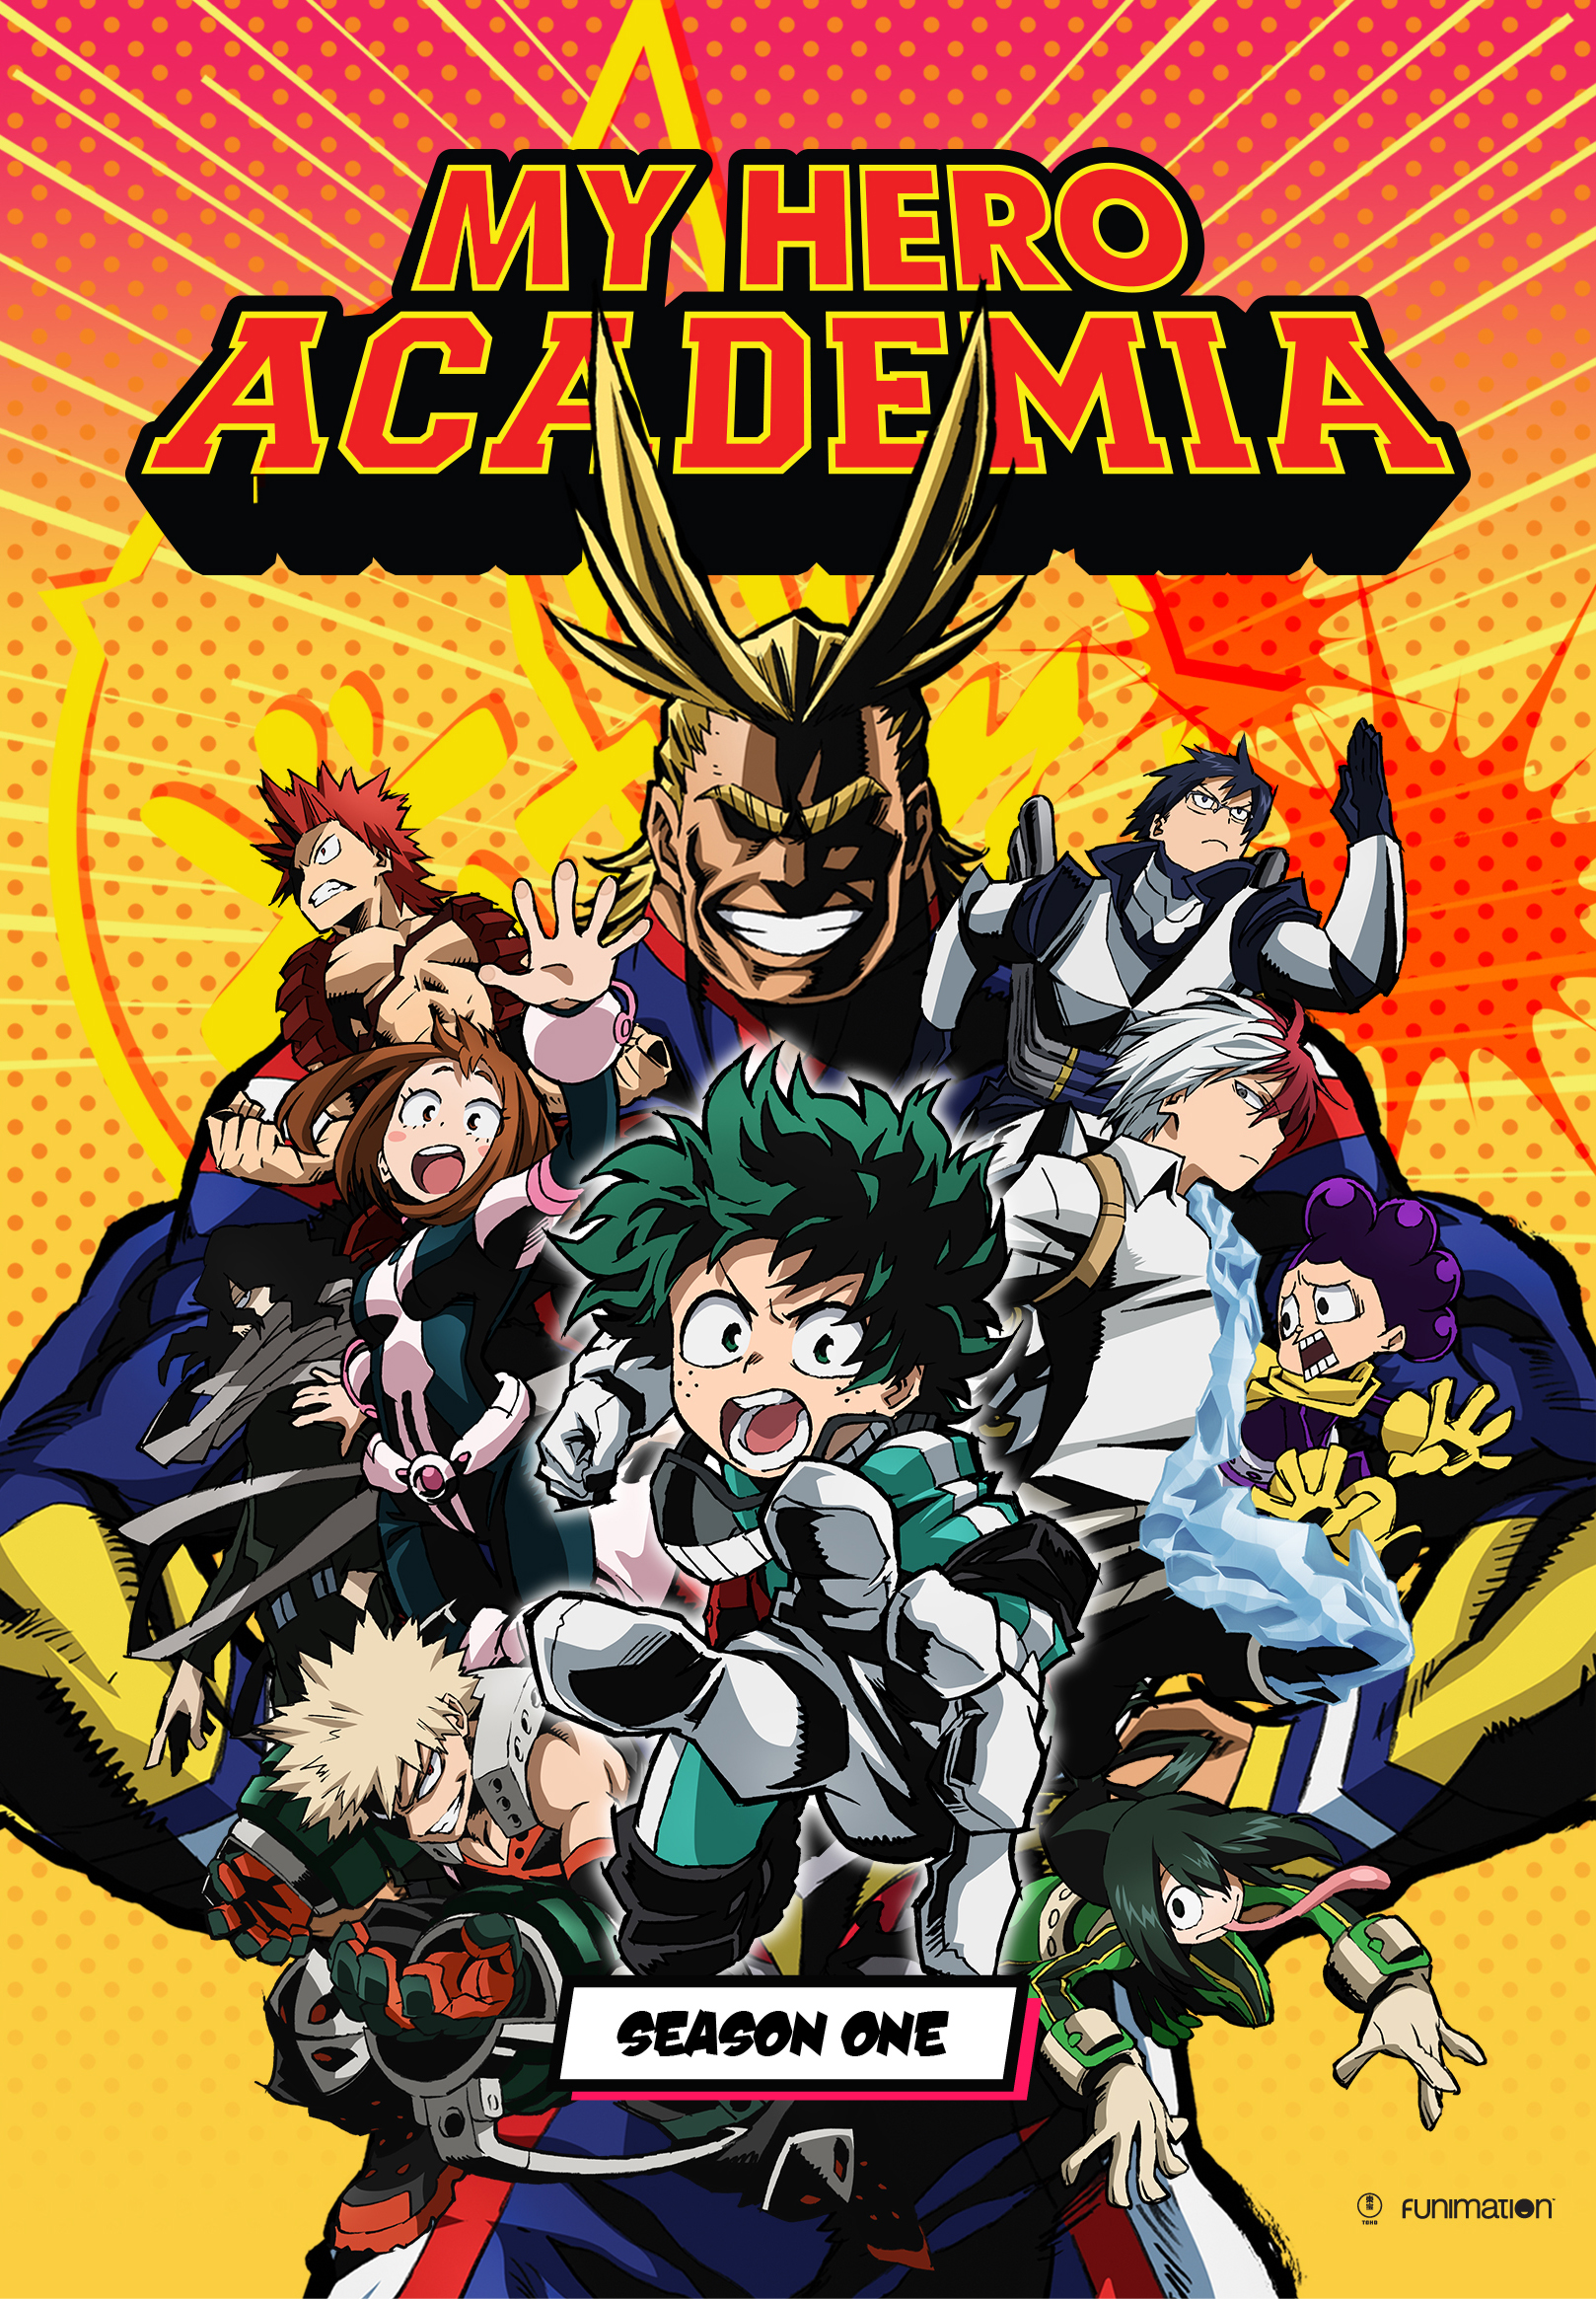 My Hero Academia: Season One (Blu-ray/DVD Crunchyroll) - image 2 of 4